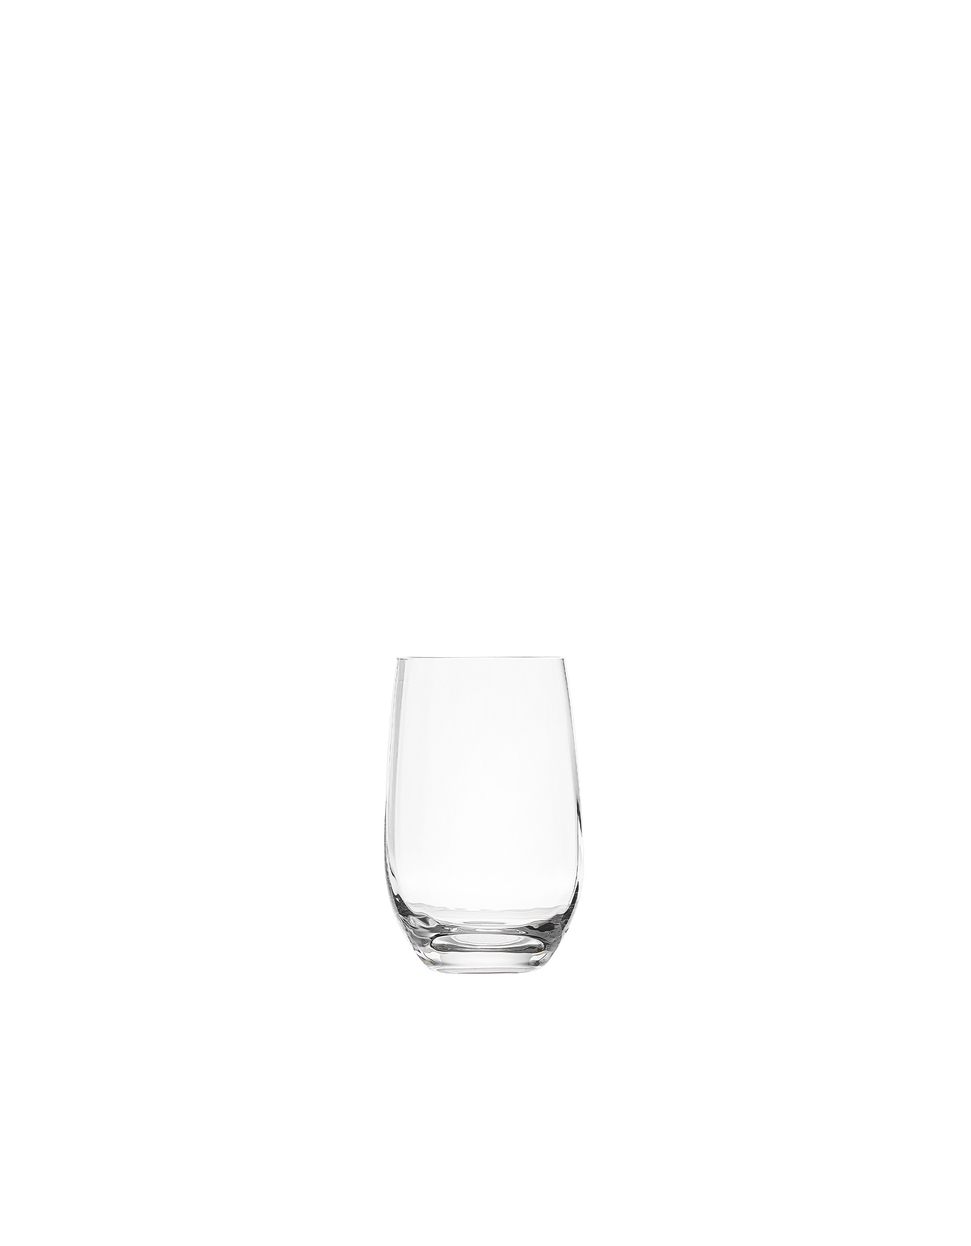 Optic shot glass, 80 ml